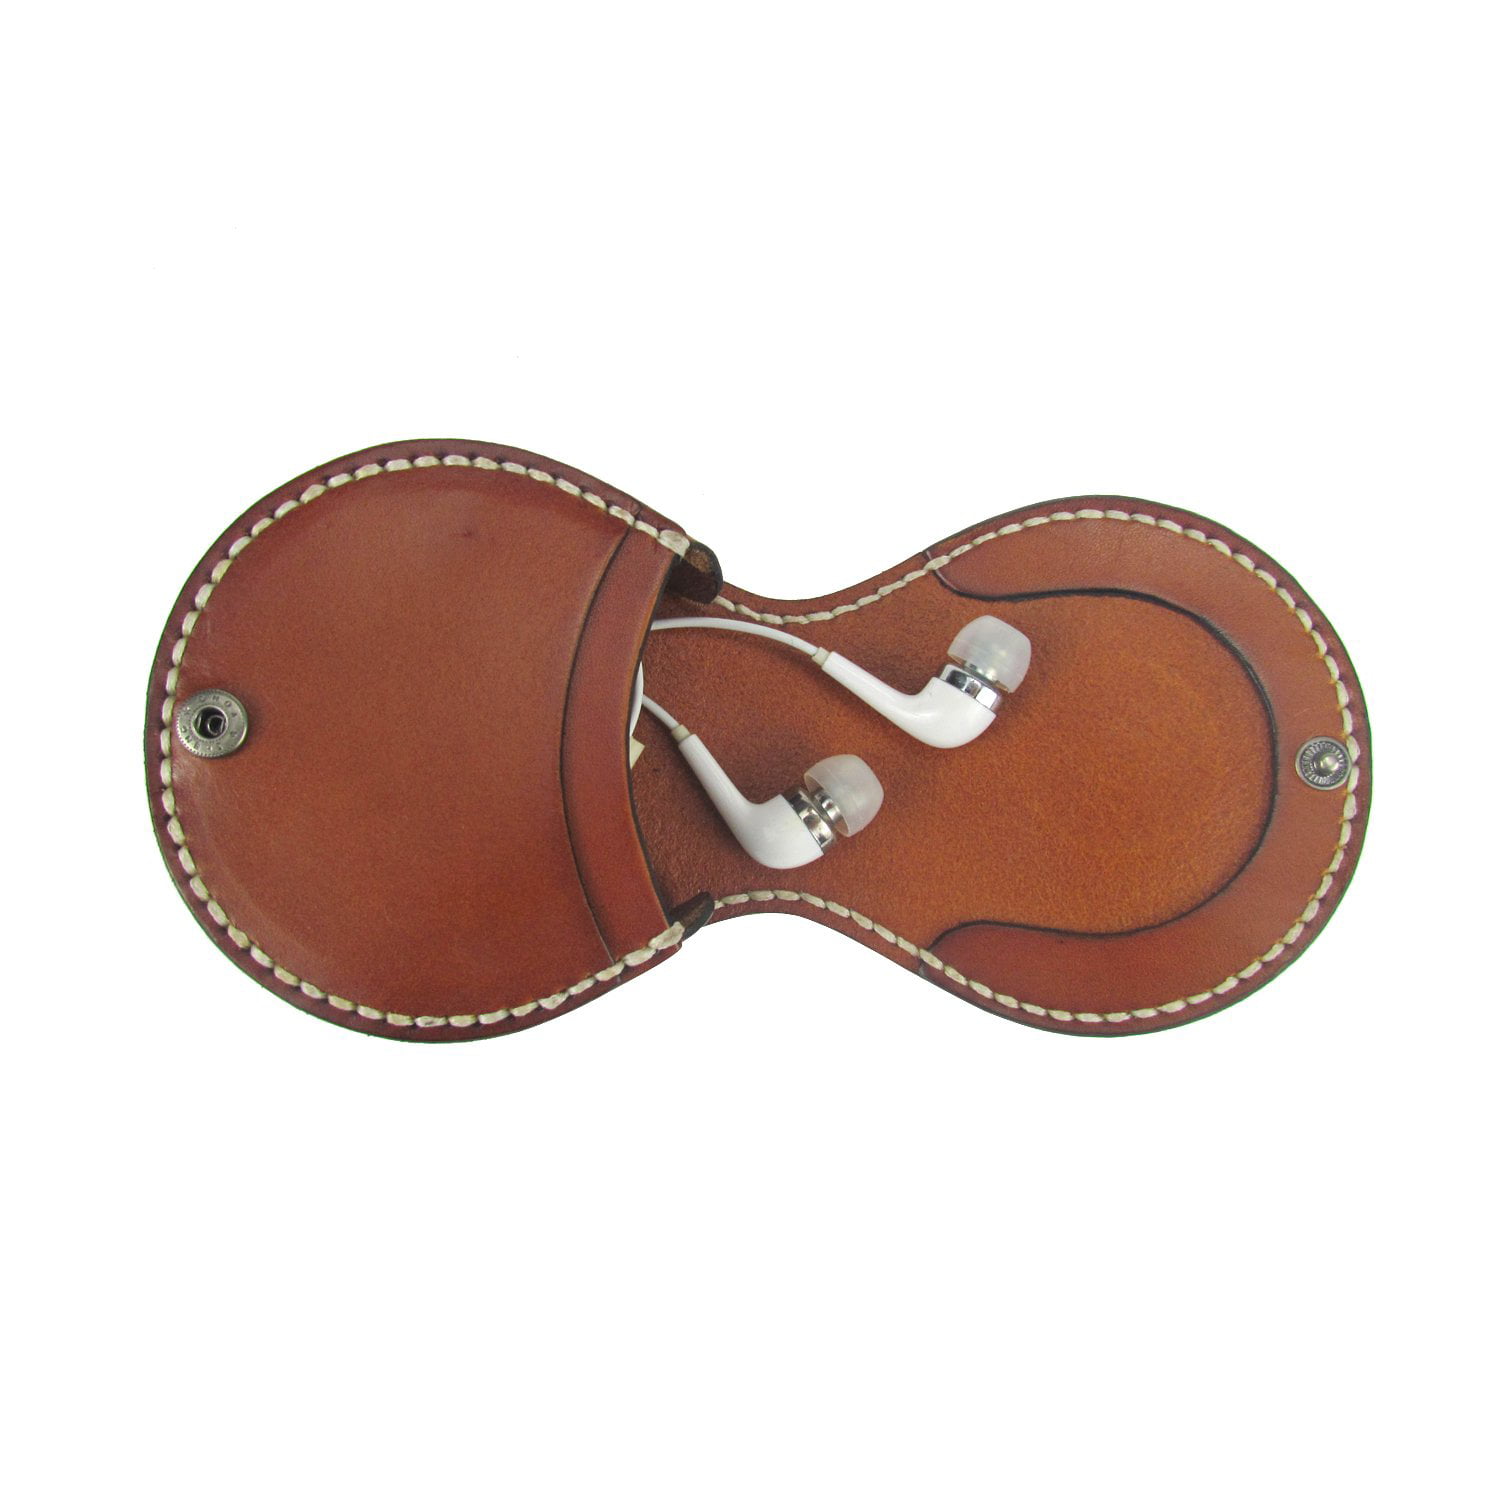 Genuine Leather Tourbon 100% Handmade Sewing Round Small Coin Purse Change Holder Earplug Key Holder